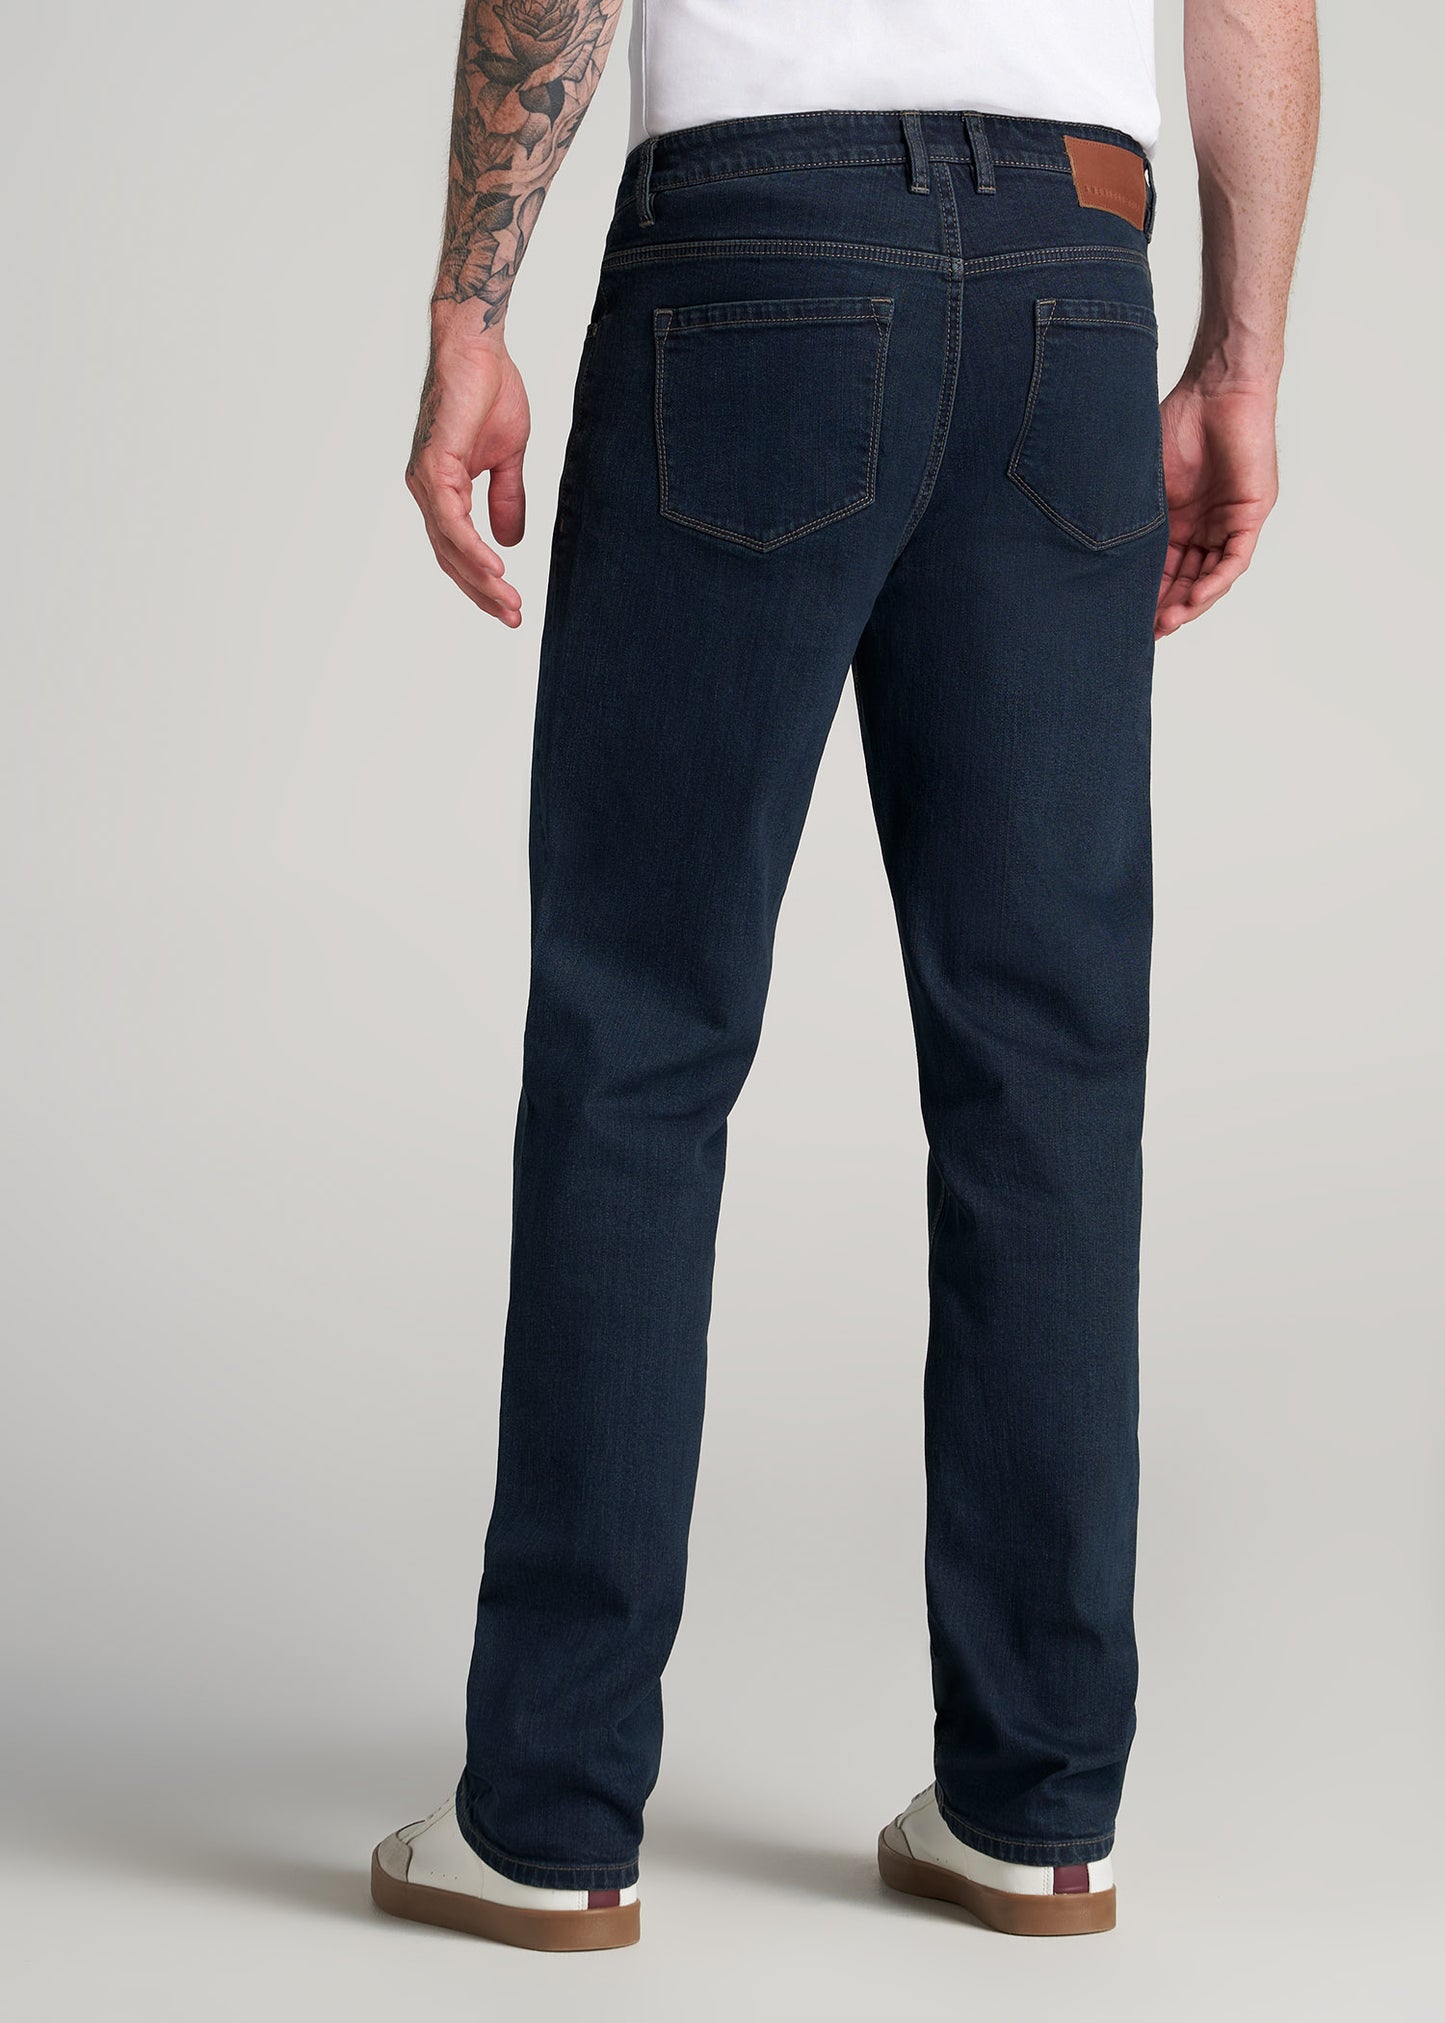     American-Tall-Men-J1-Jeans-Deep-Blue-Rinse-back